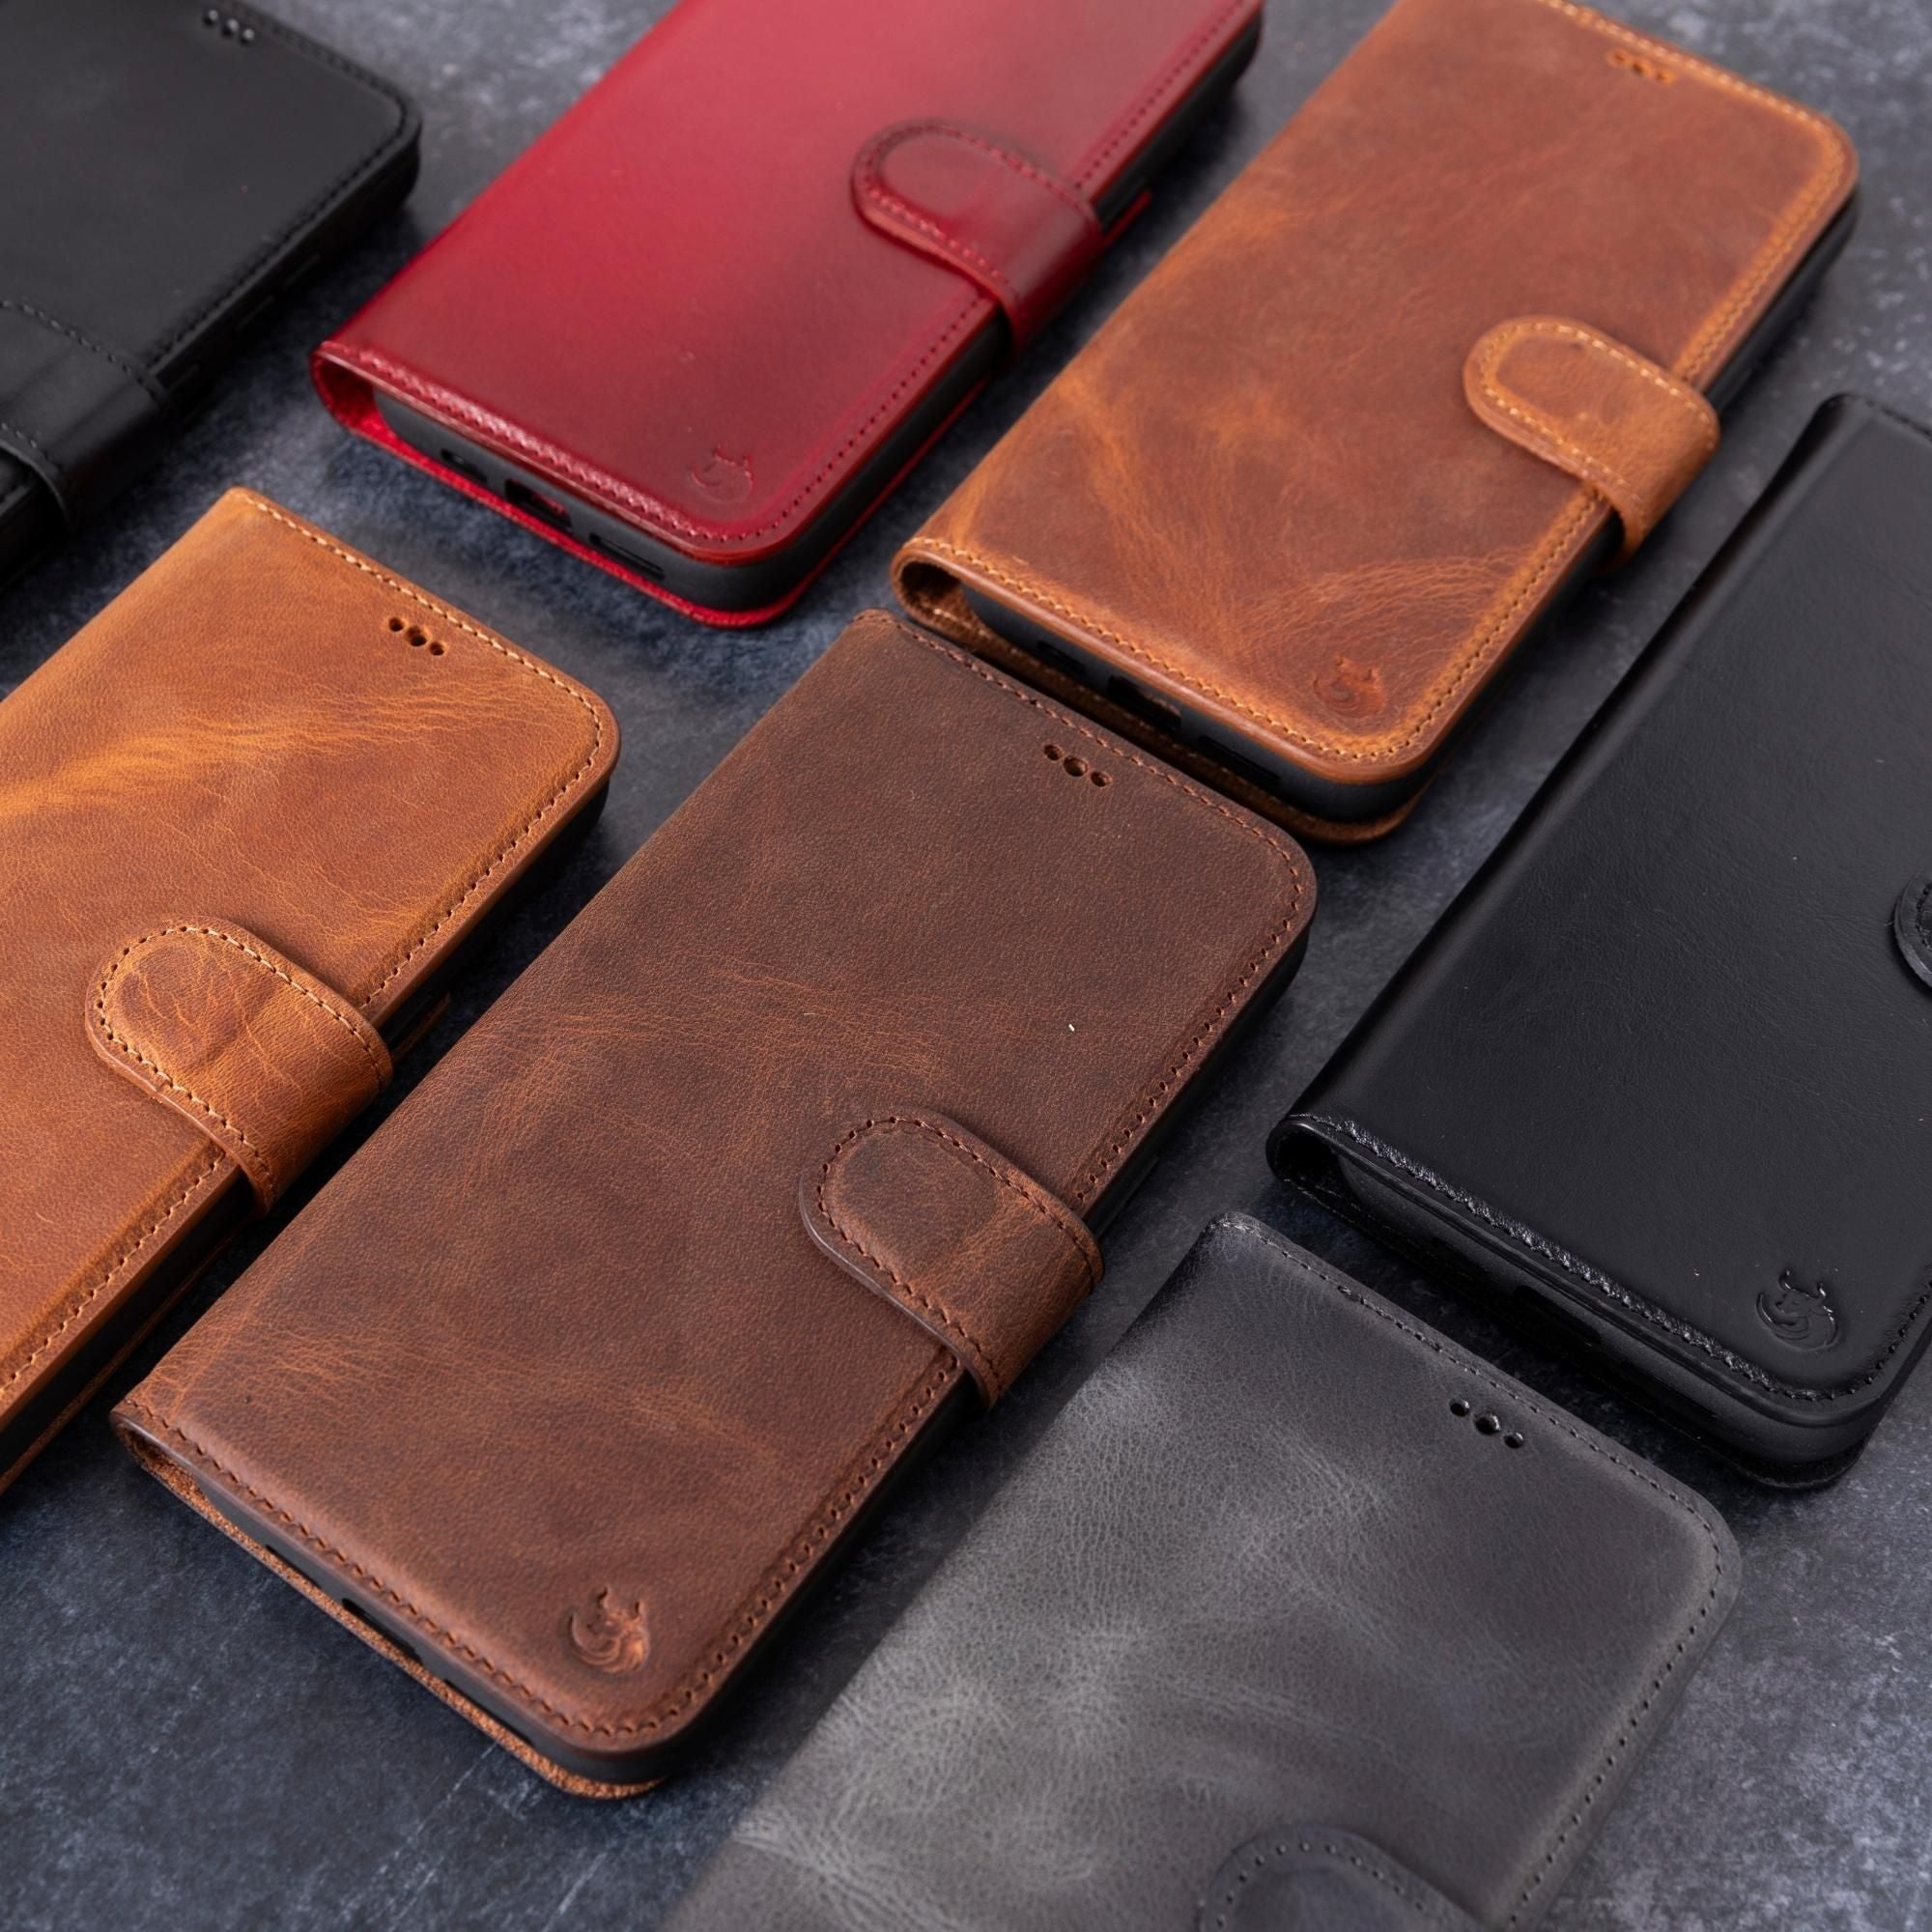 iPhone X Series Leather Cases - TORONATA